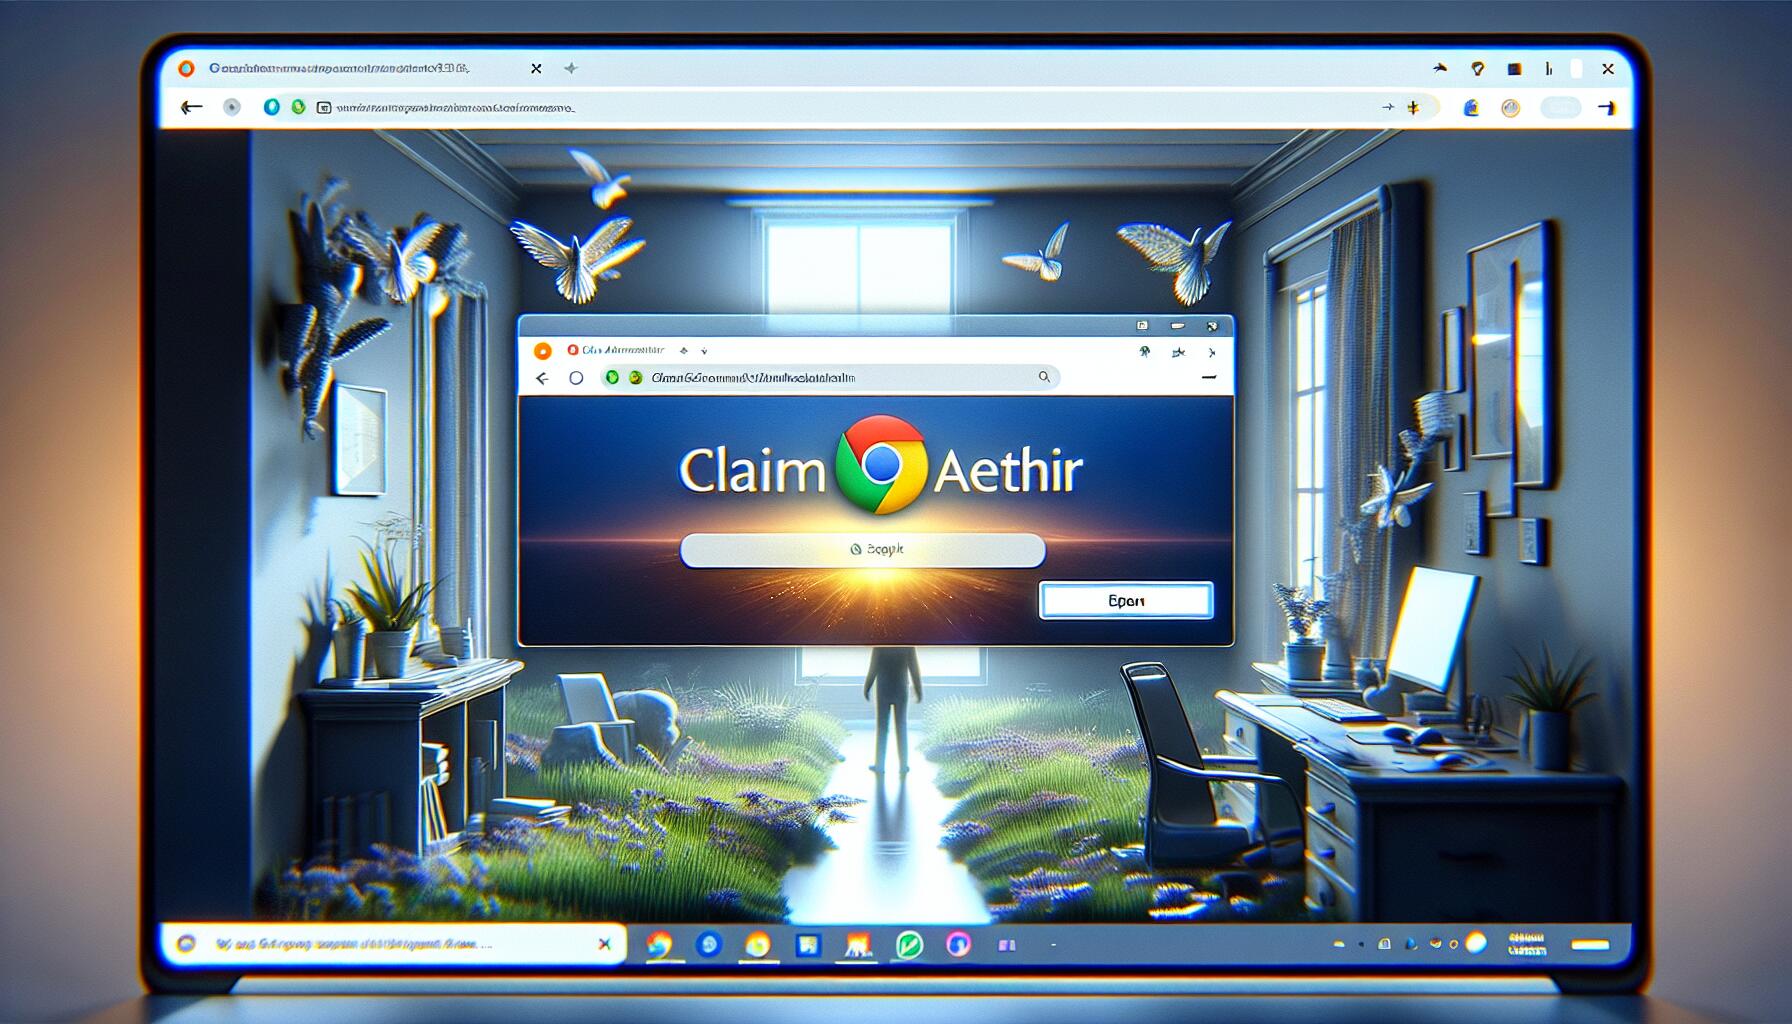 claim aethir ads